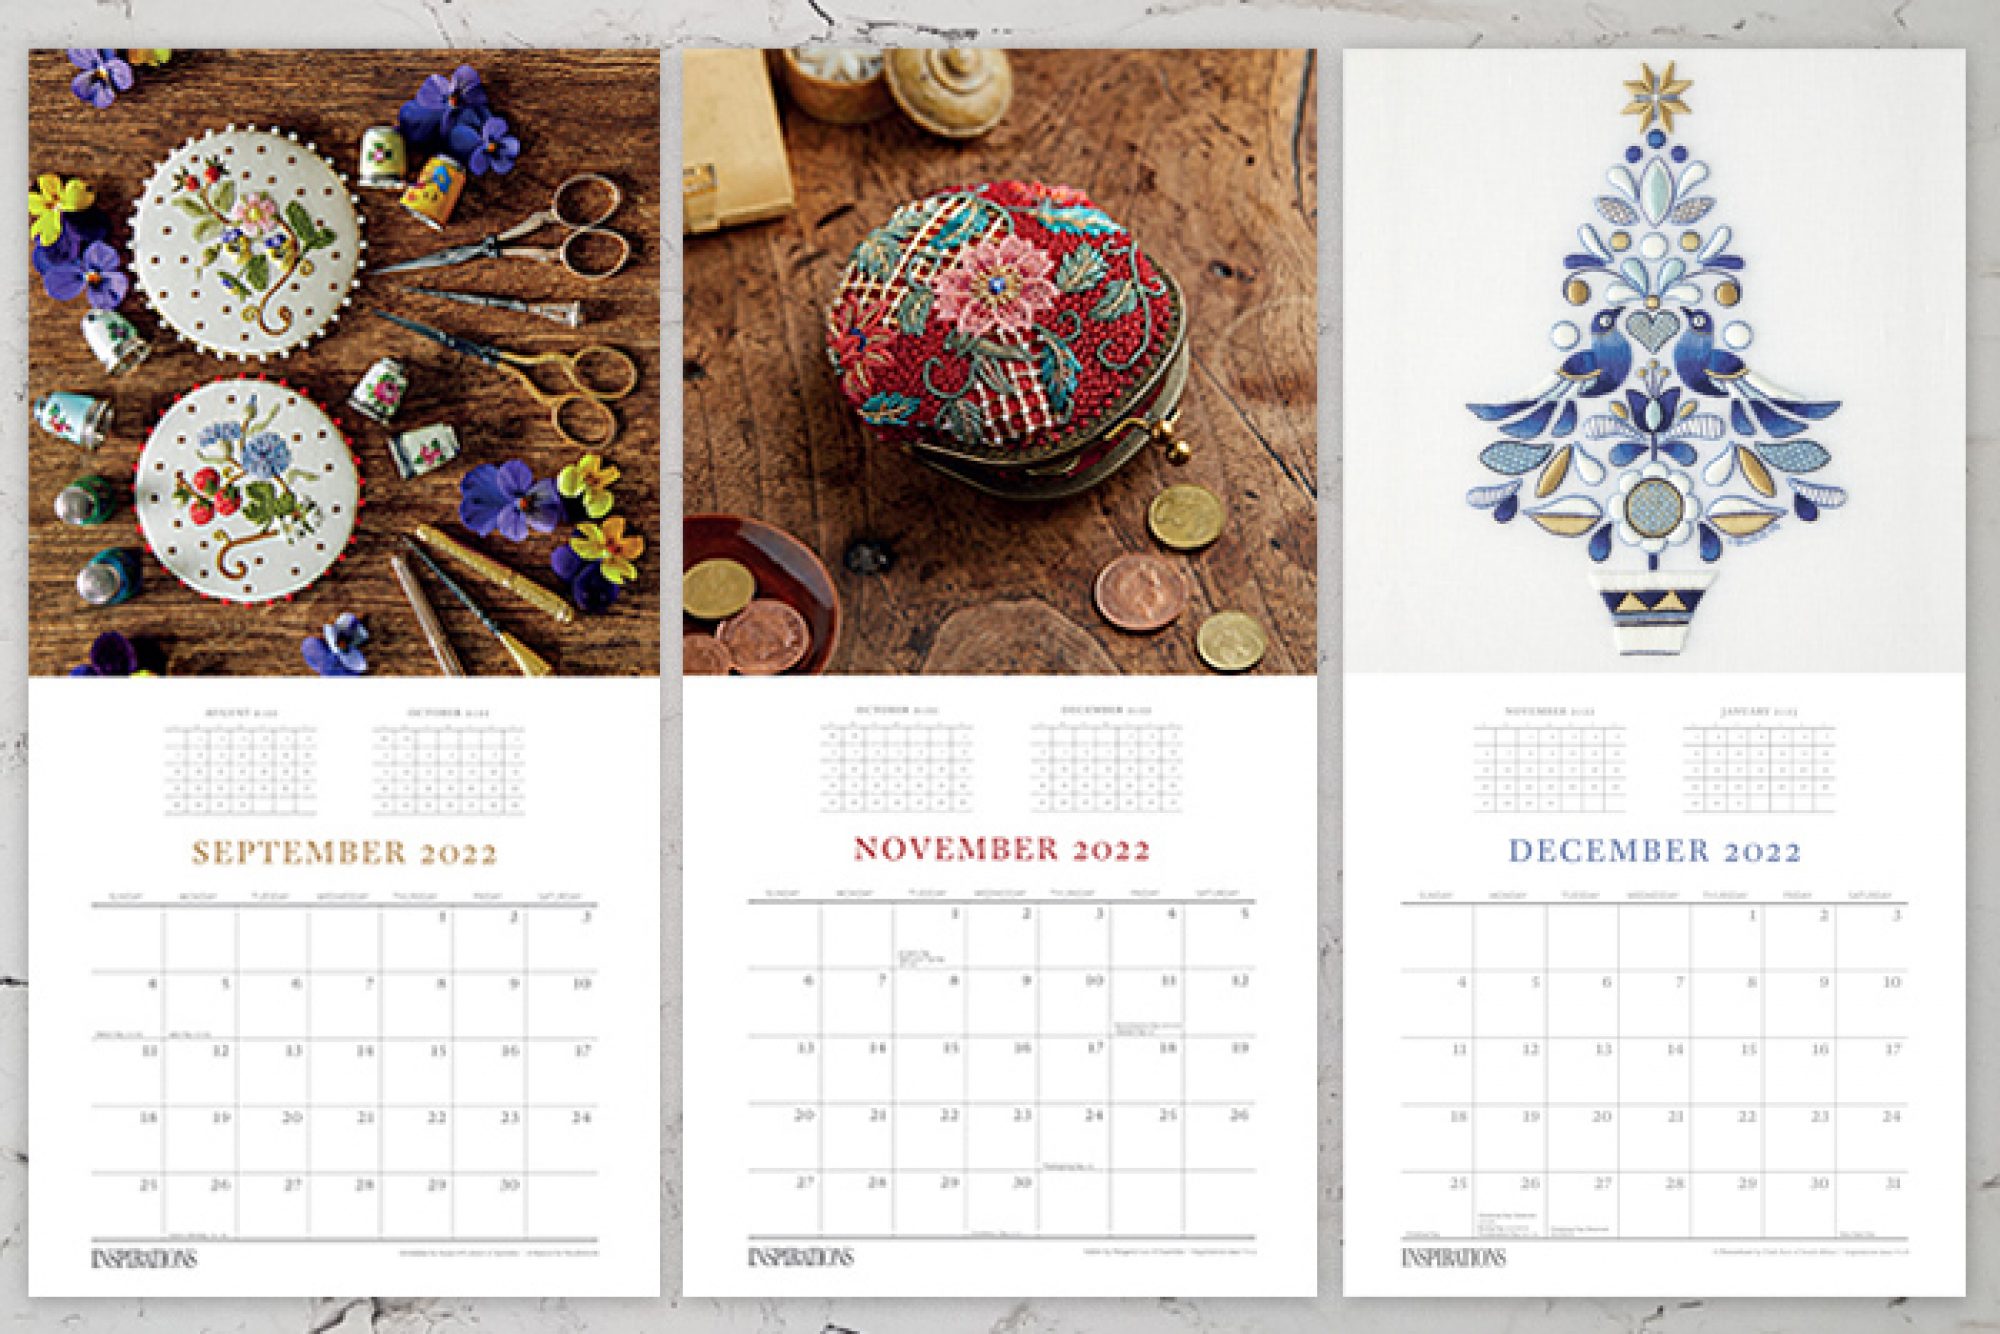 Stevens Calendar 2022 Inspirations 2022 Calendar Out Now - Inspirations Studios